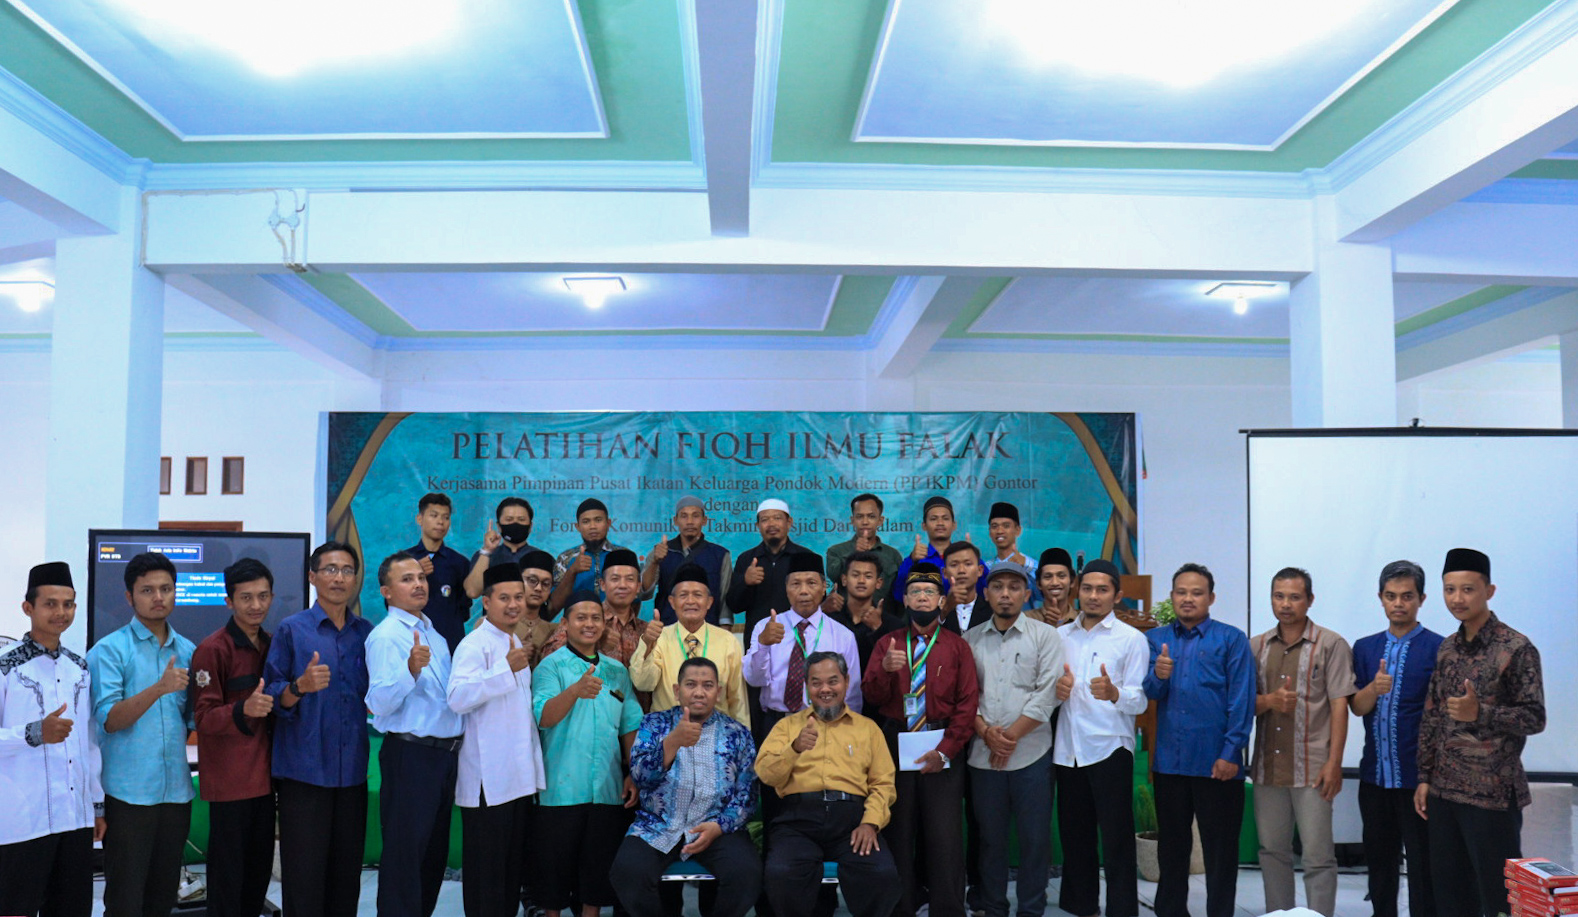 Pelatihan Fiqh Ilmu Falak, Sebagai Ajang Silaturahmi Takmir Masjid Se-Kabupaten Ponorogo